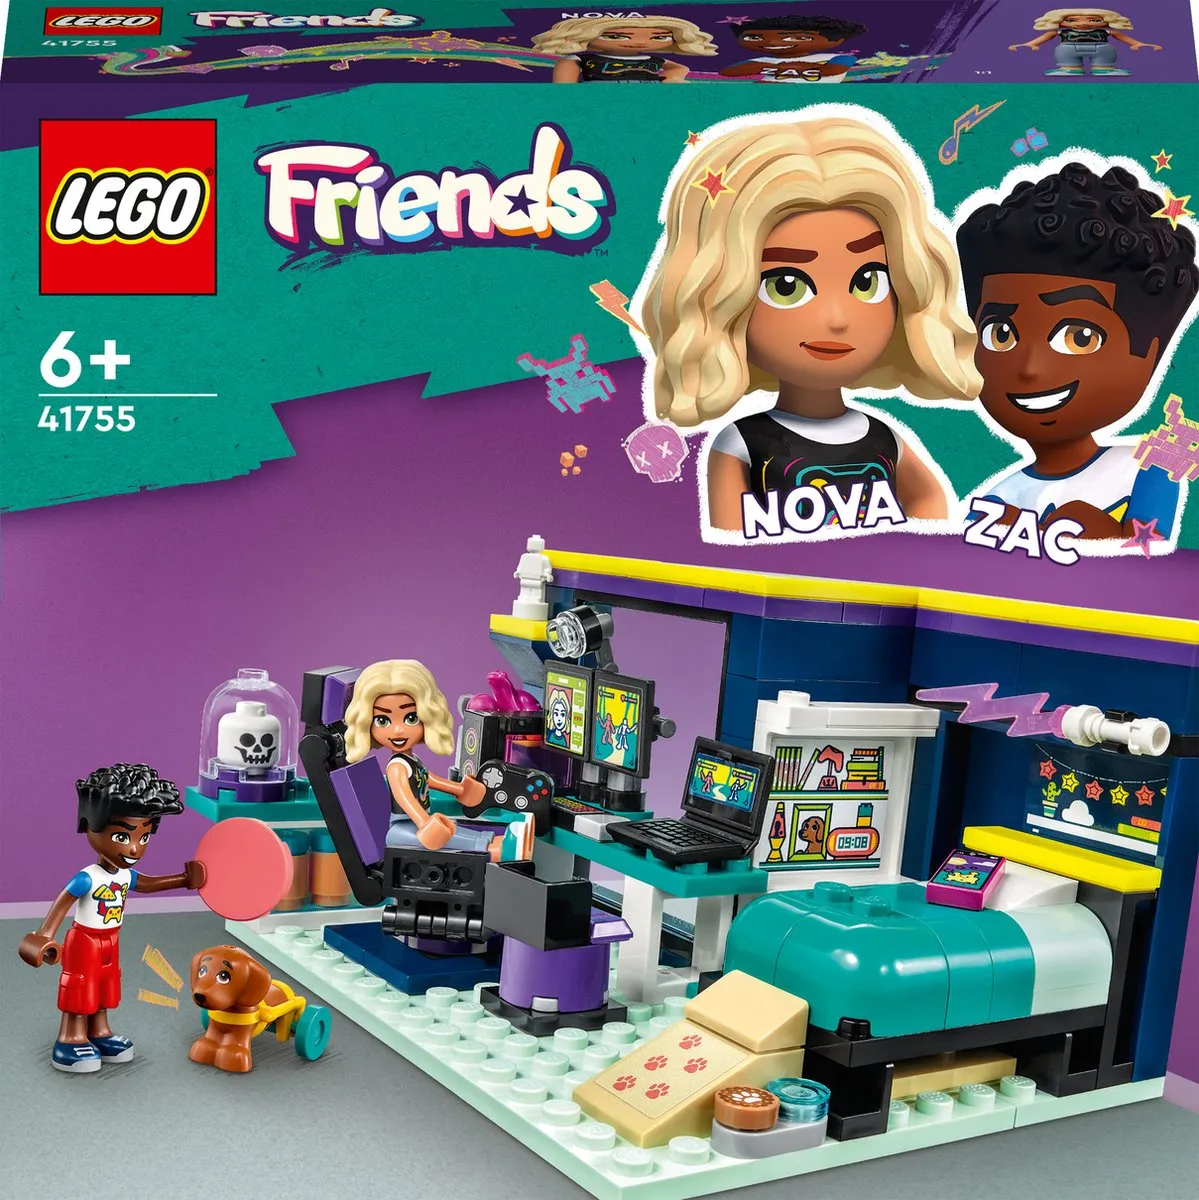 LEGO Friends Nova's kamer Speelset met Minipoppetjes - 41755 speelgoed